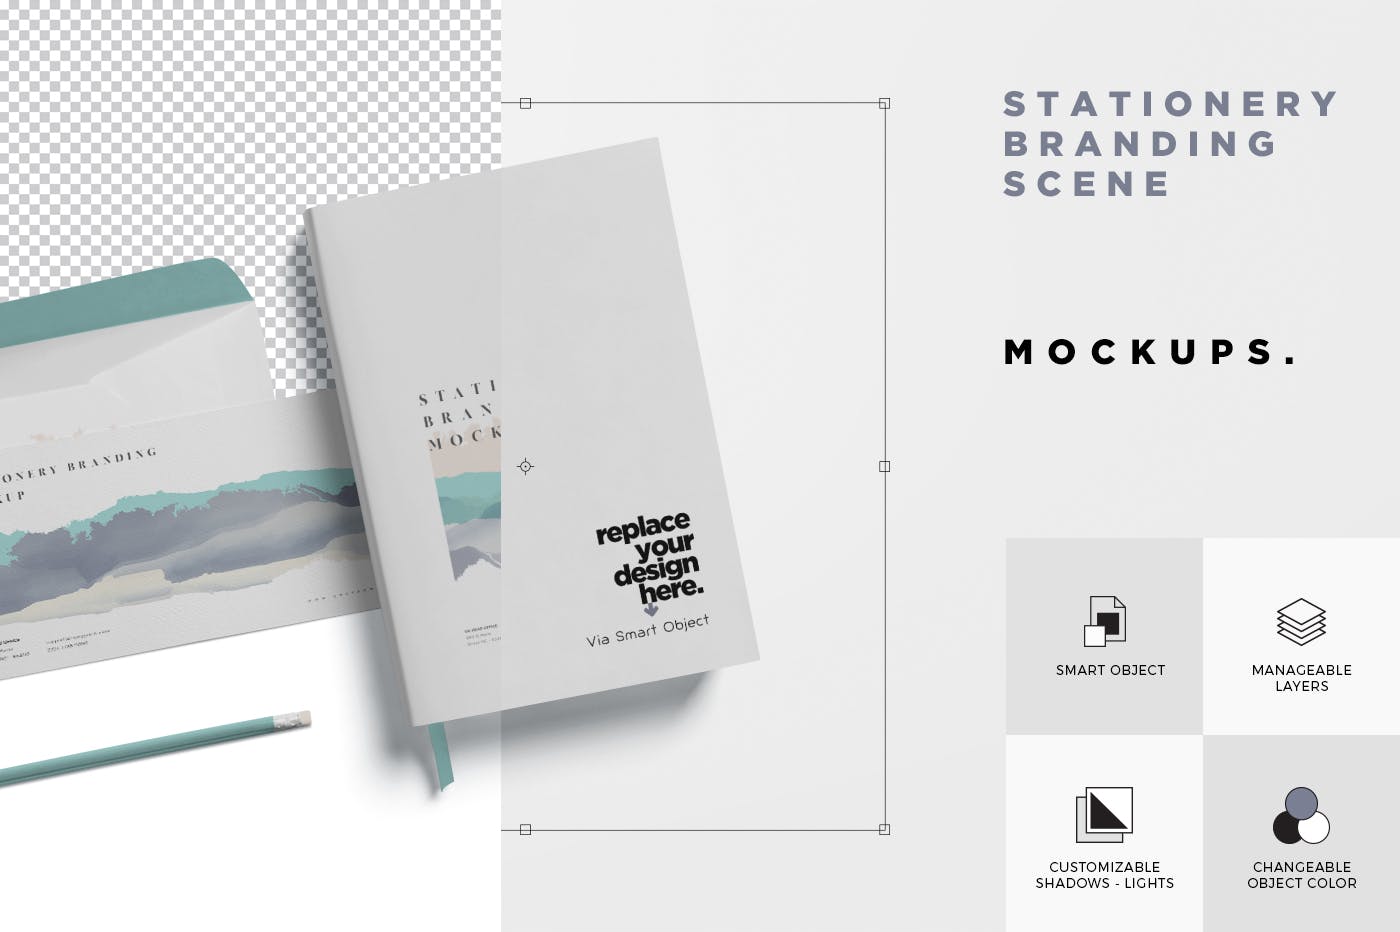 企业品牌VI设计预览办公用品样机模板 Stationery Branding Mockup Scenes插图(6)